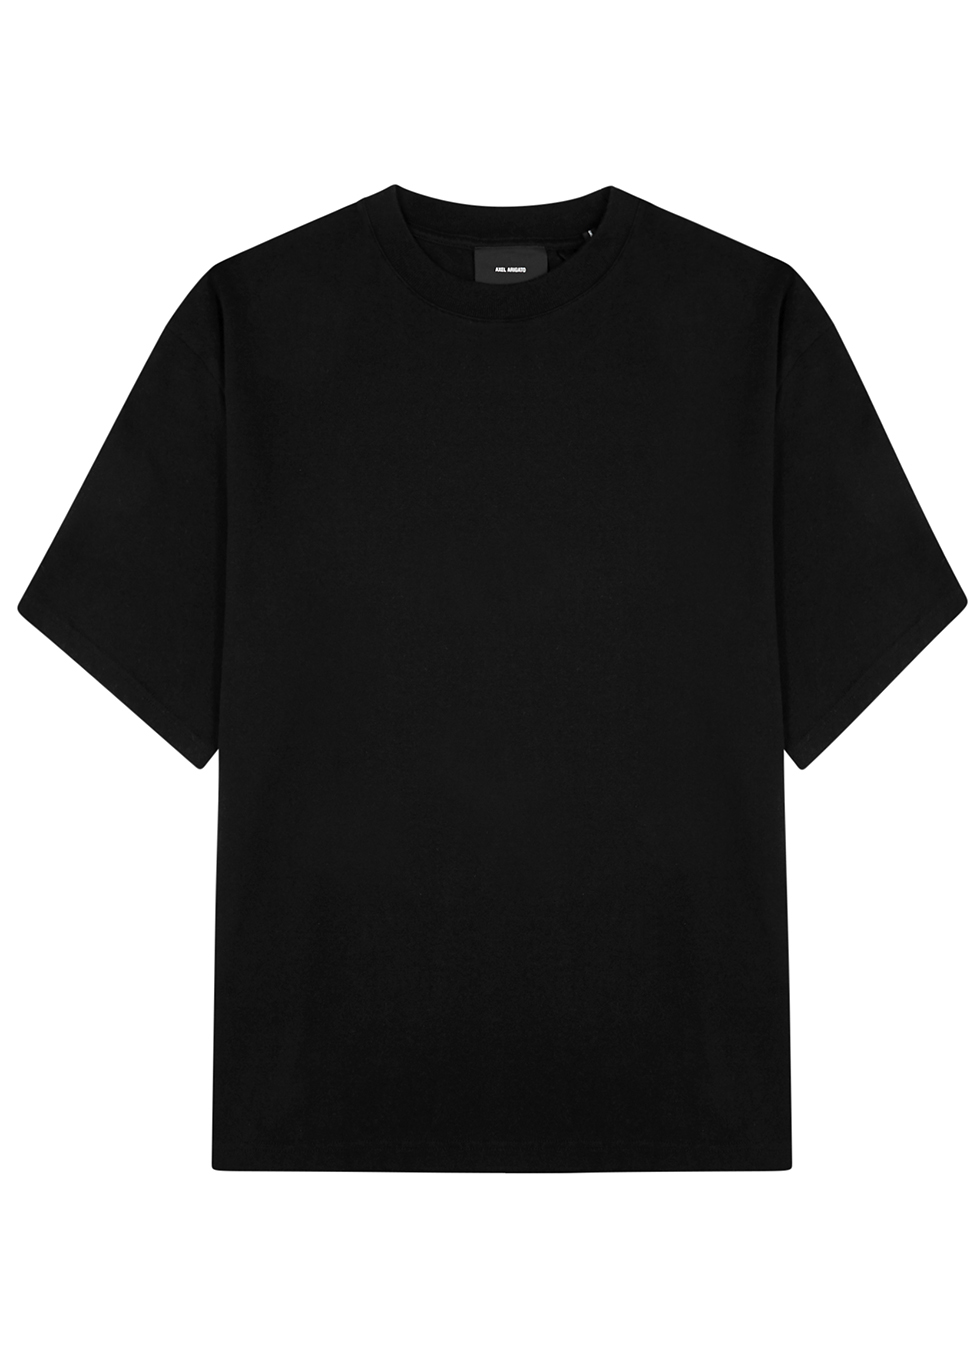 Lock Stitch black cotton T-shirt